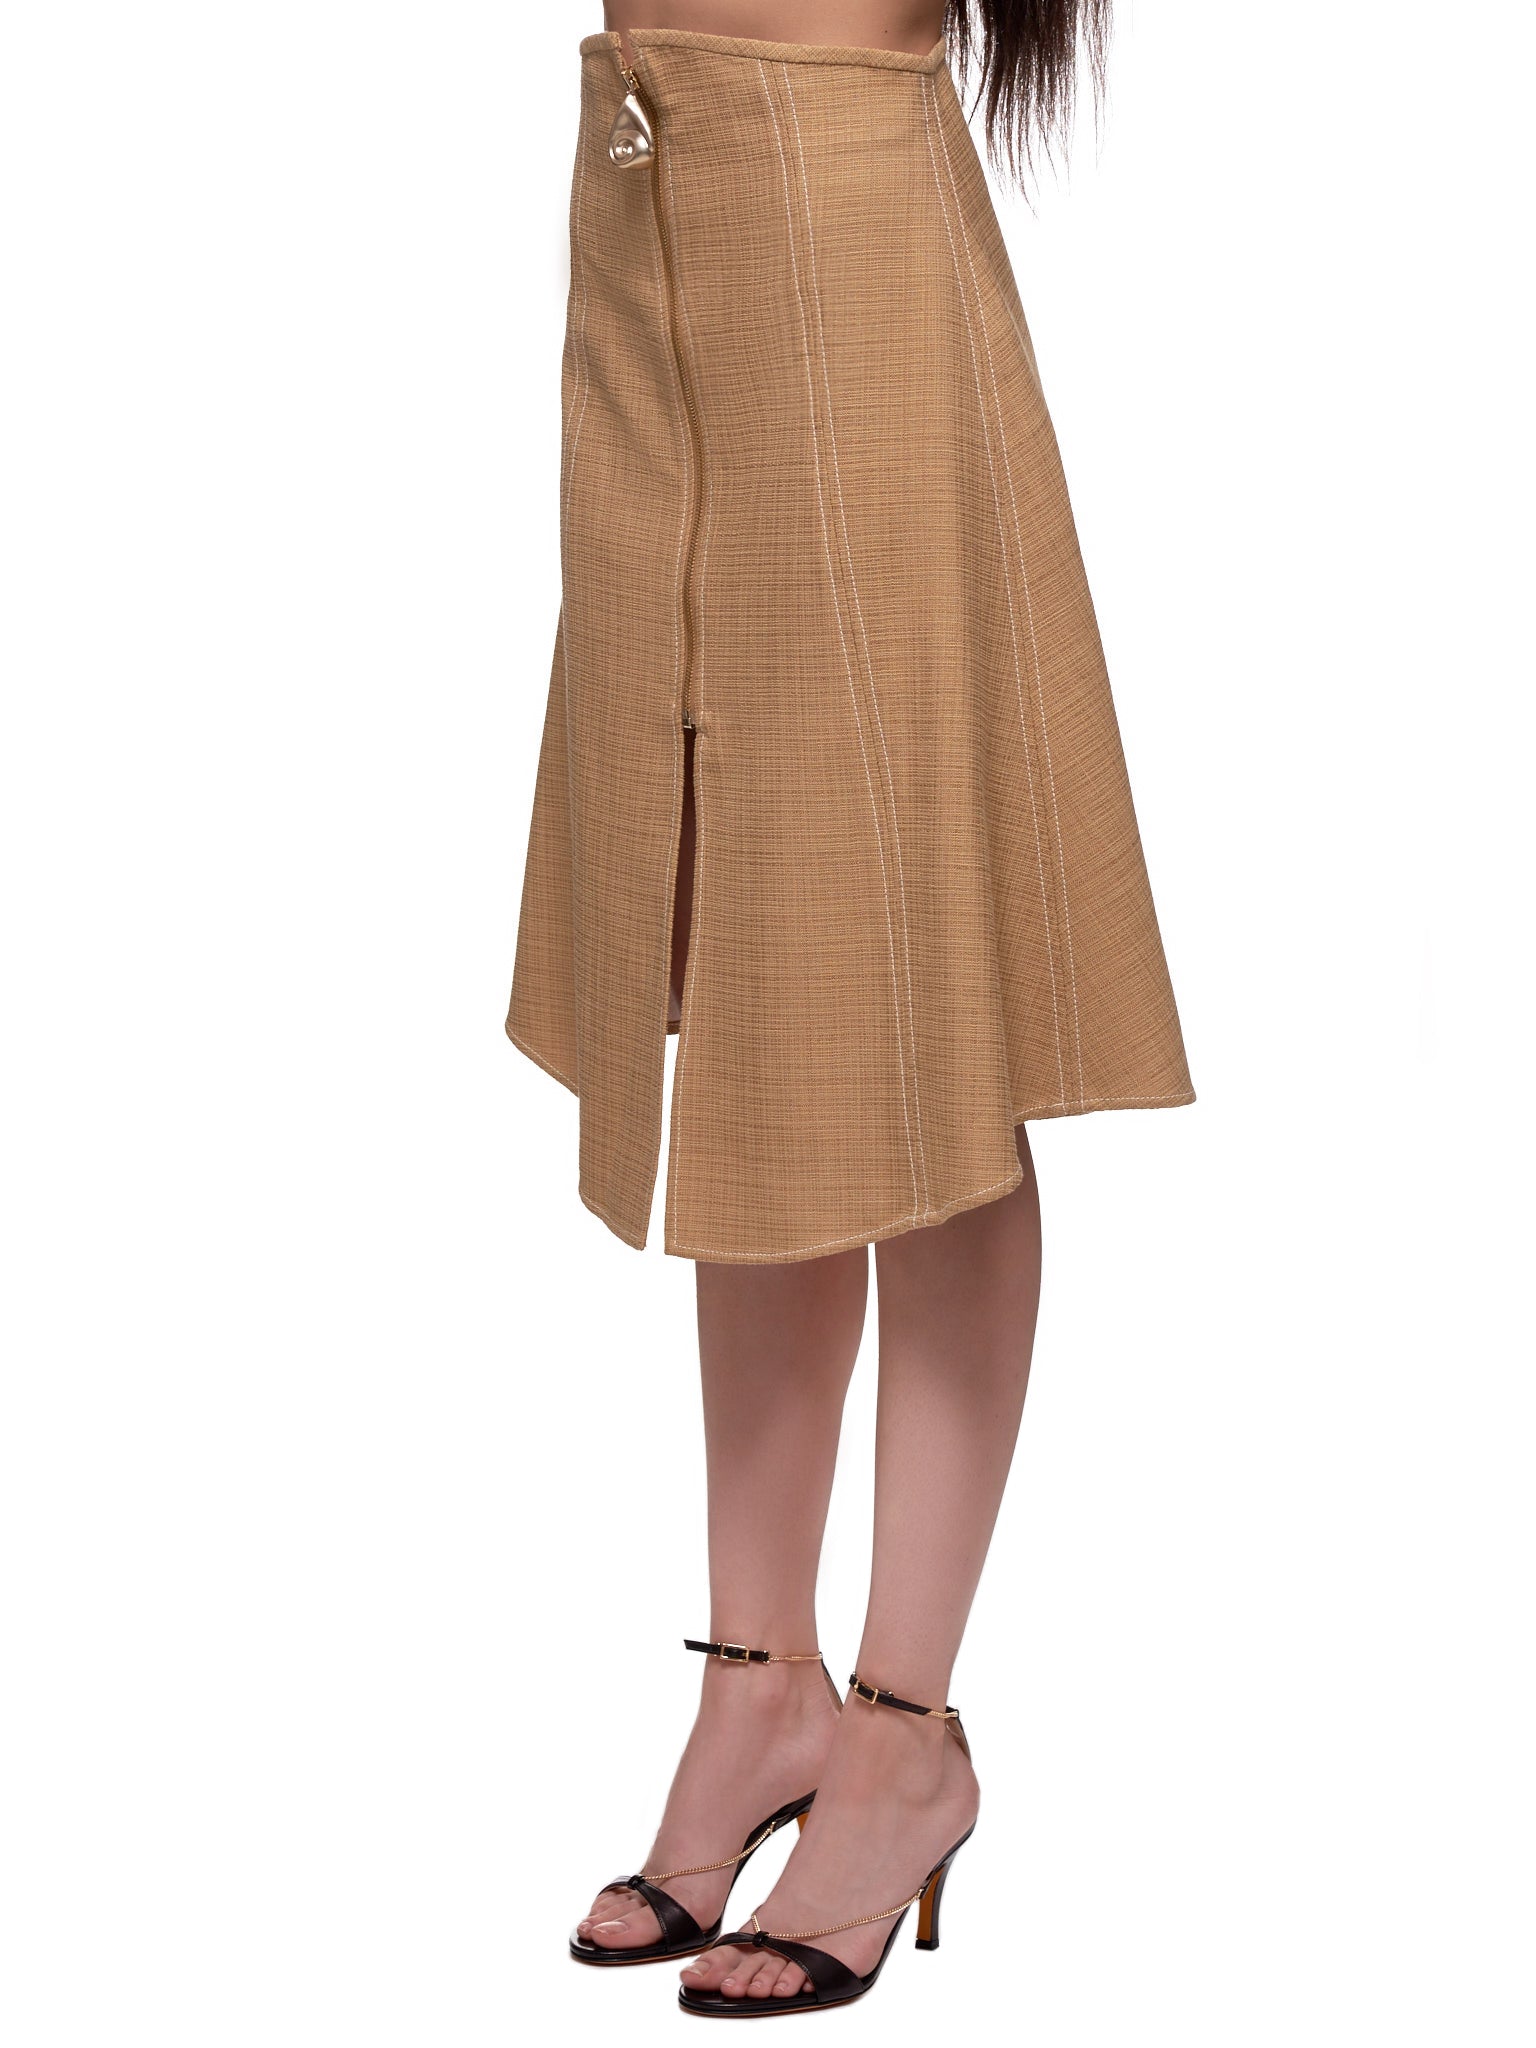 High Waisted Skirt (4031-173-TAN)